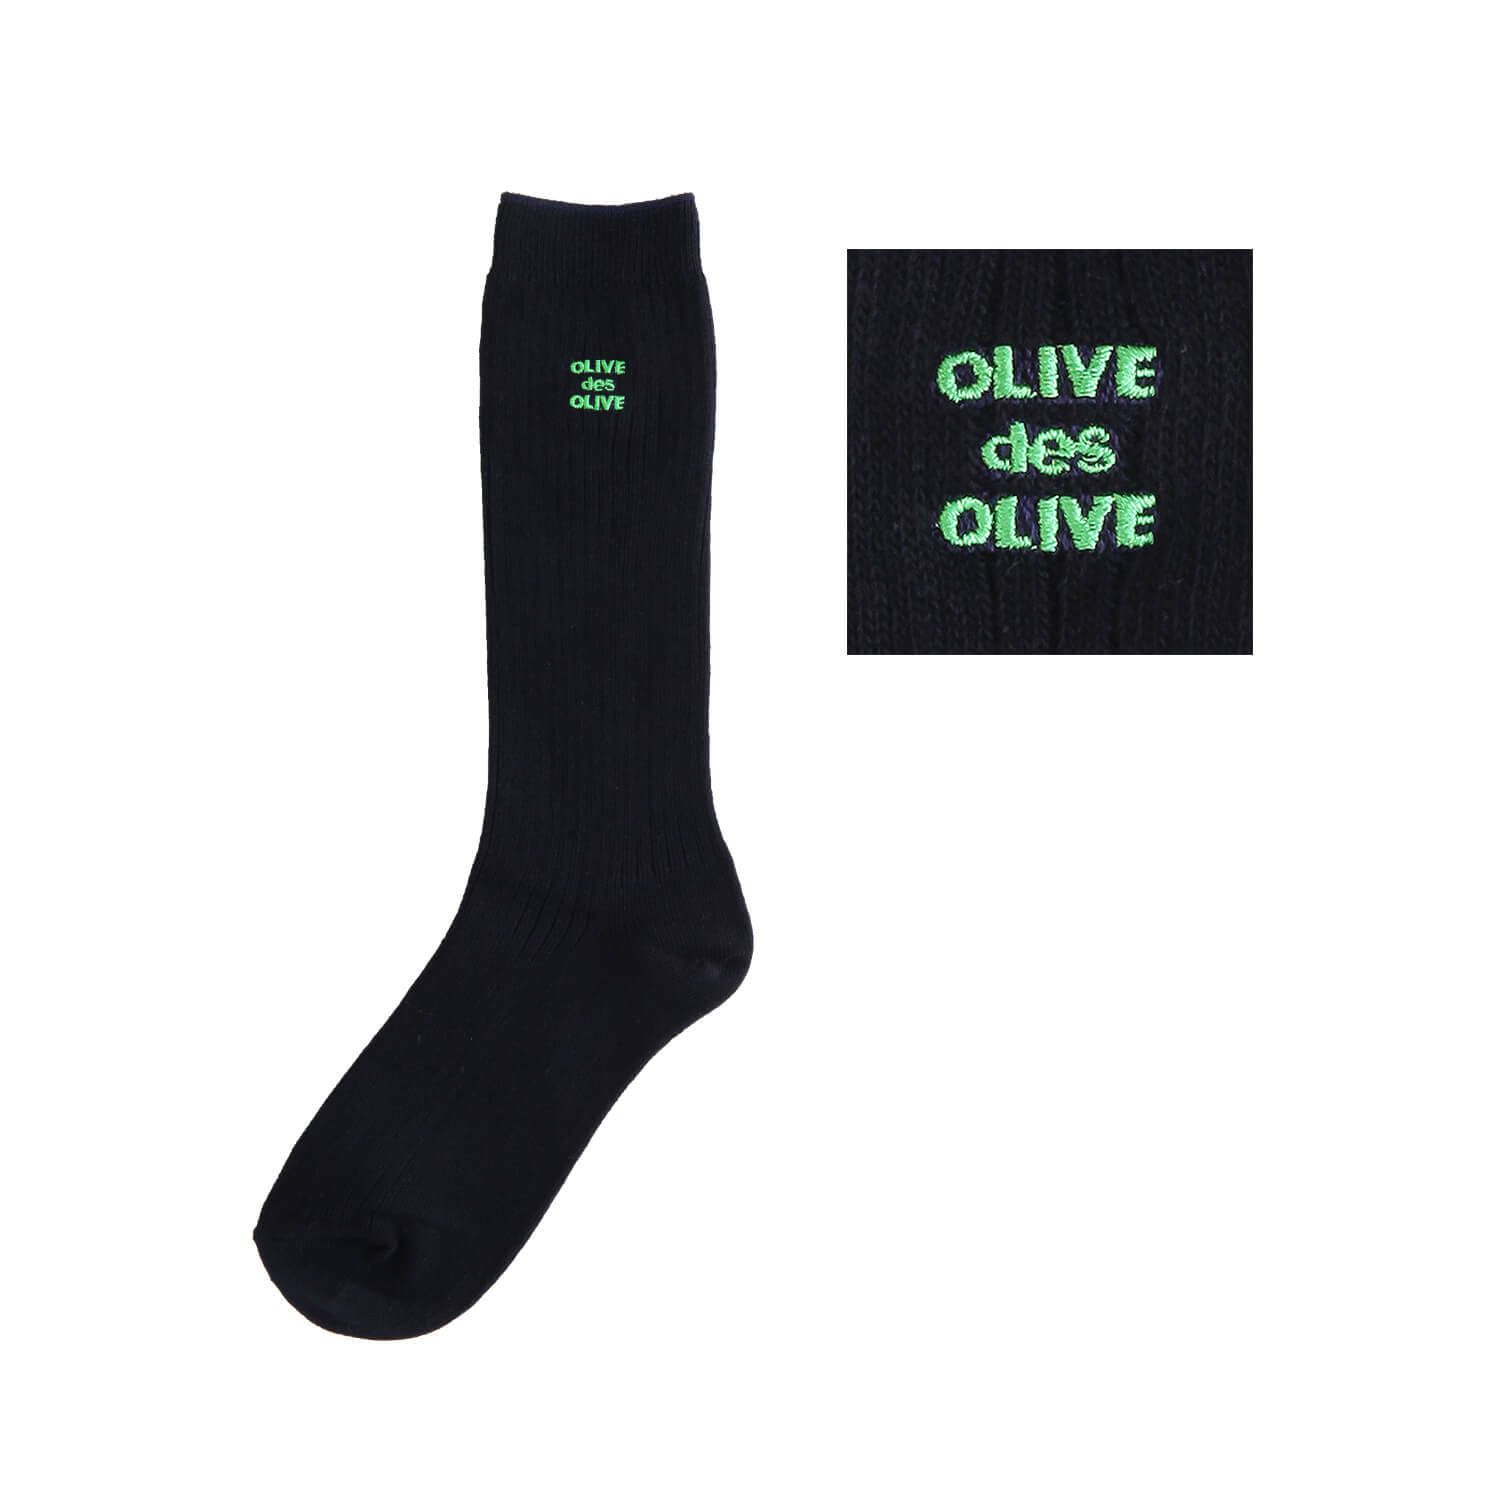 OLIVE des OLIVEのポップなロゴ刺繍入りのレギュラーソックス。刺繍カラー-45緑